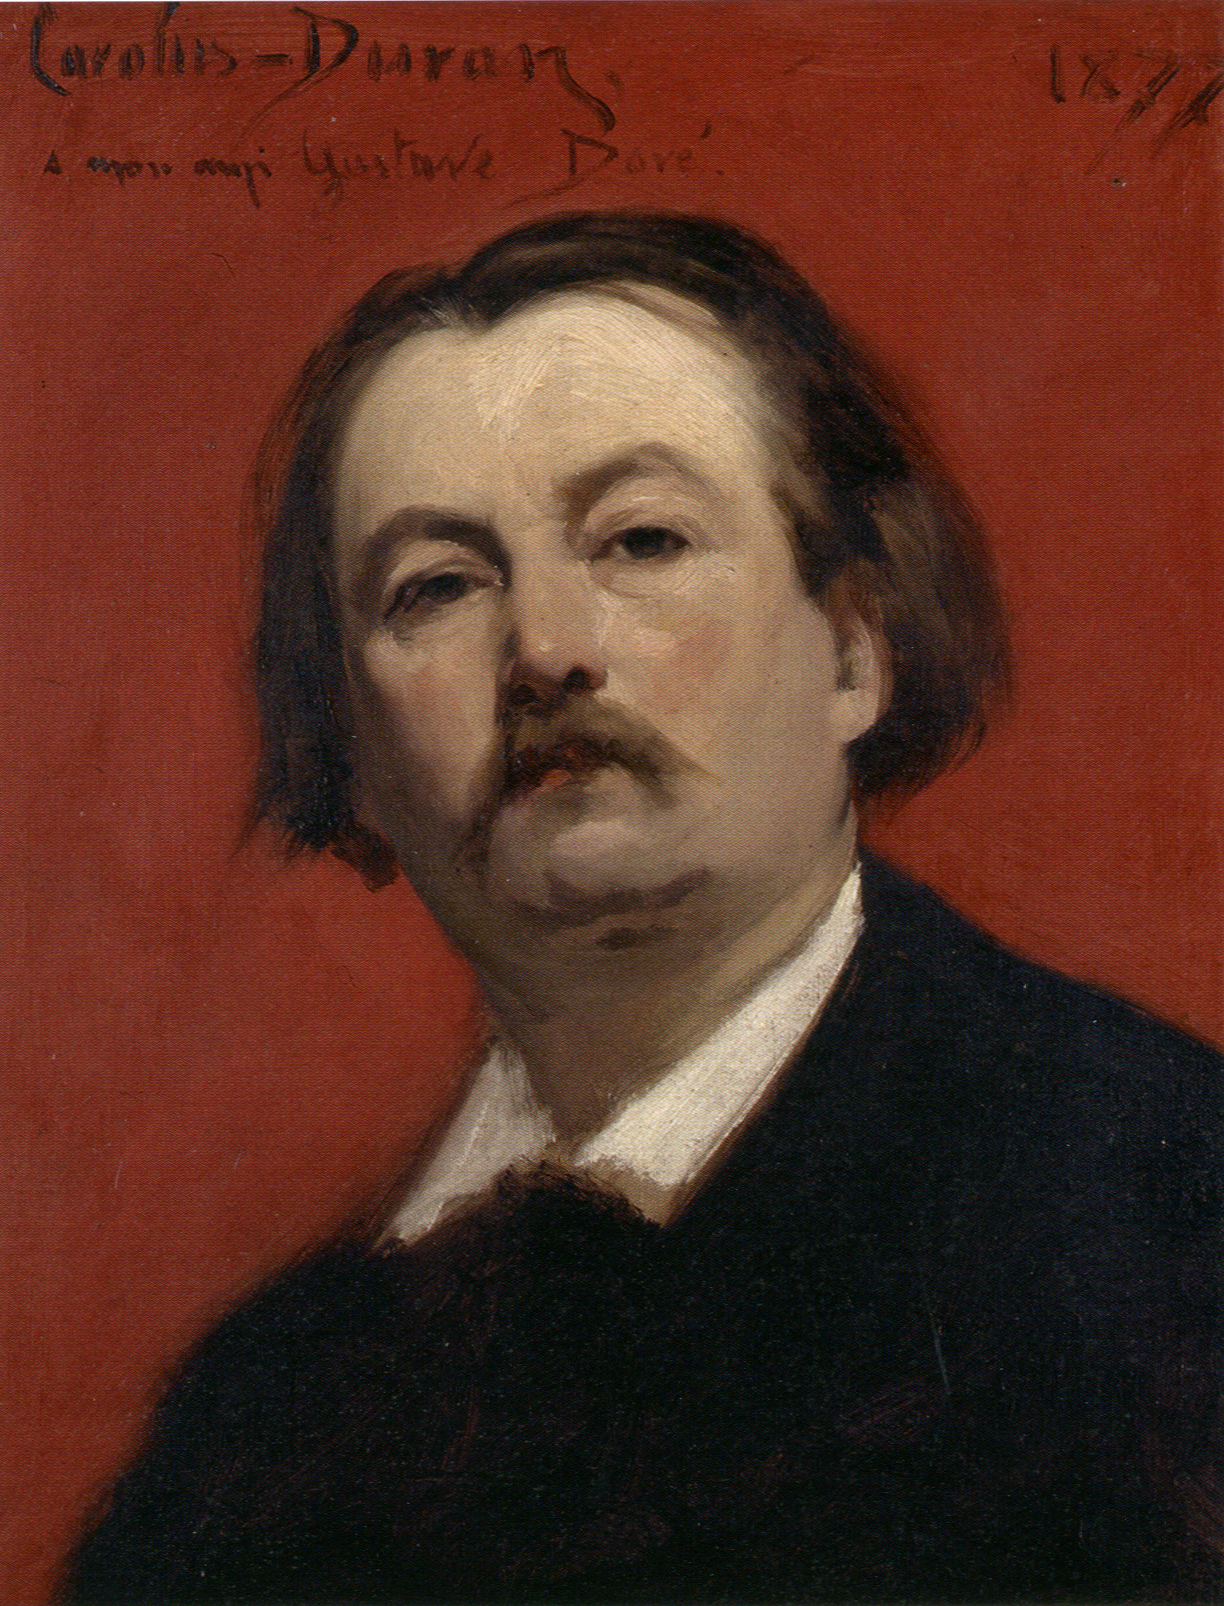 Gustave Doré - January 6, 1832 - January 23, 1883